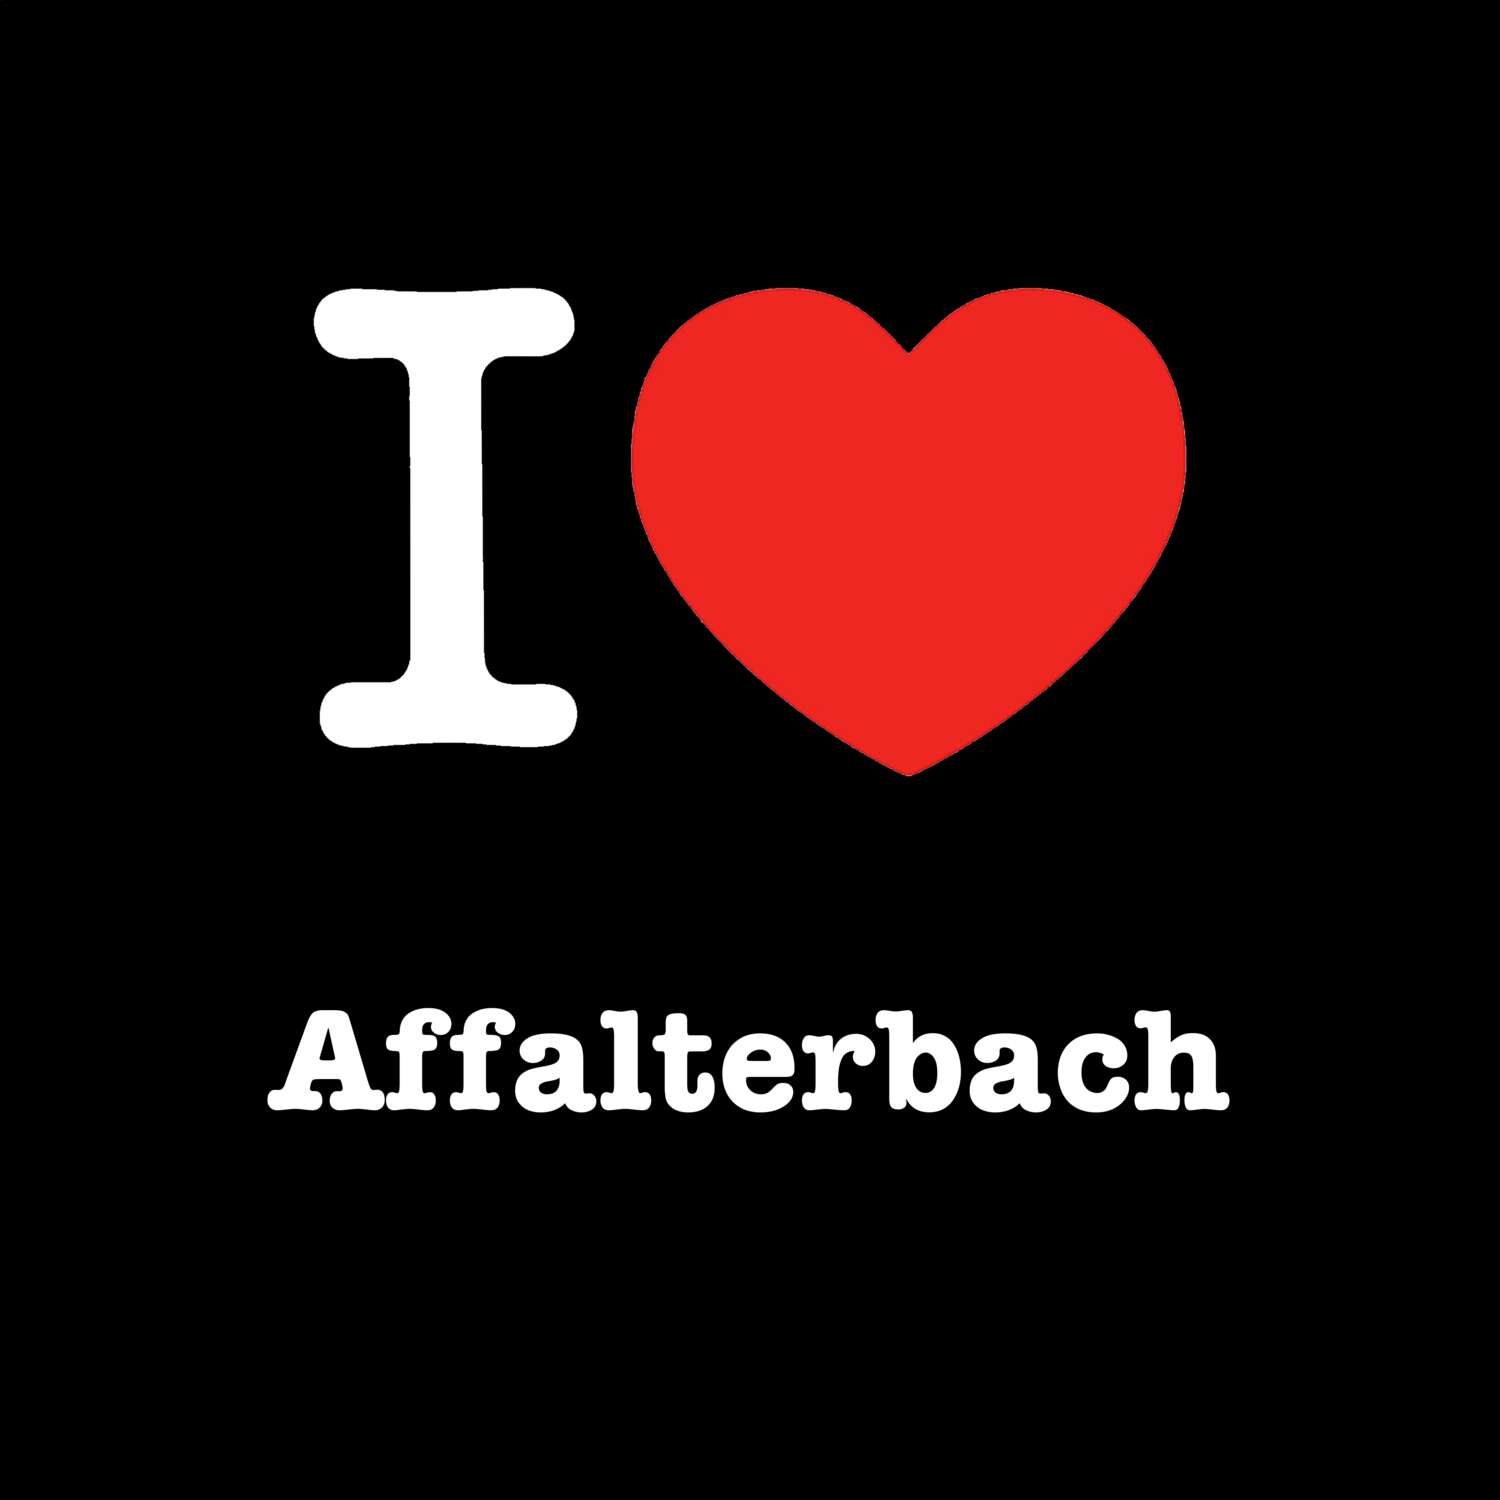 Affalterbach T-Shirt »I love«